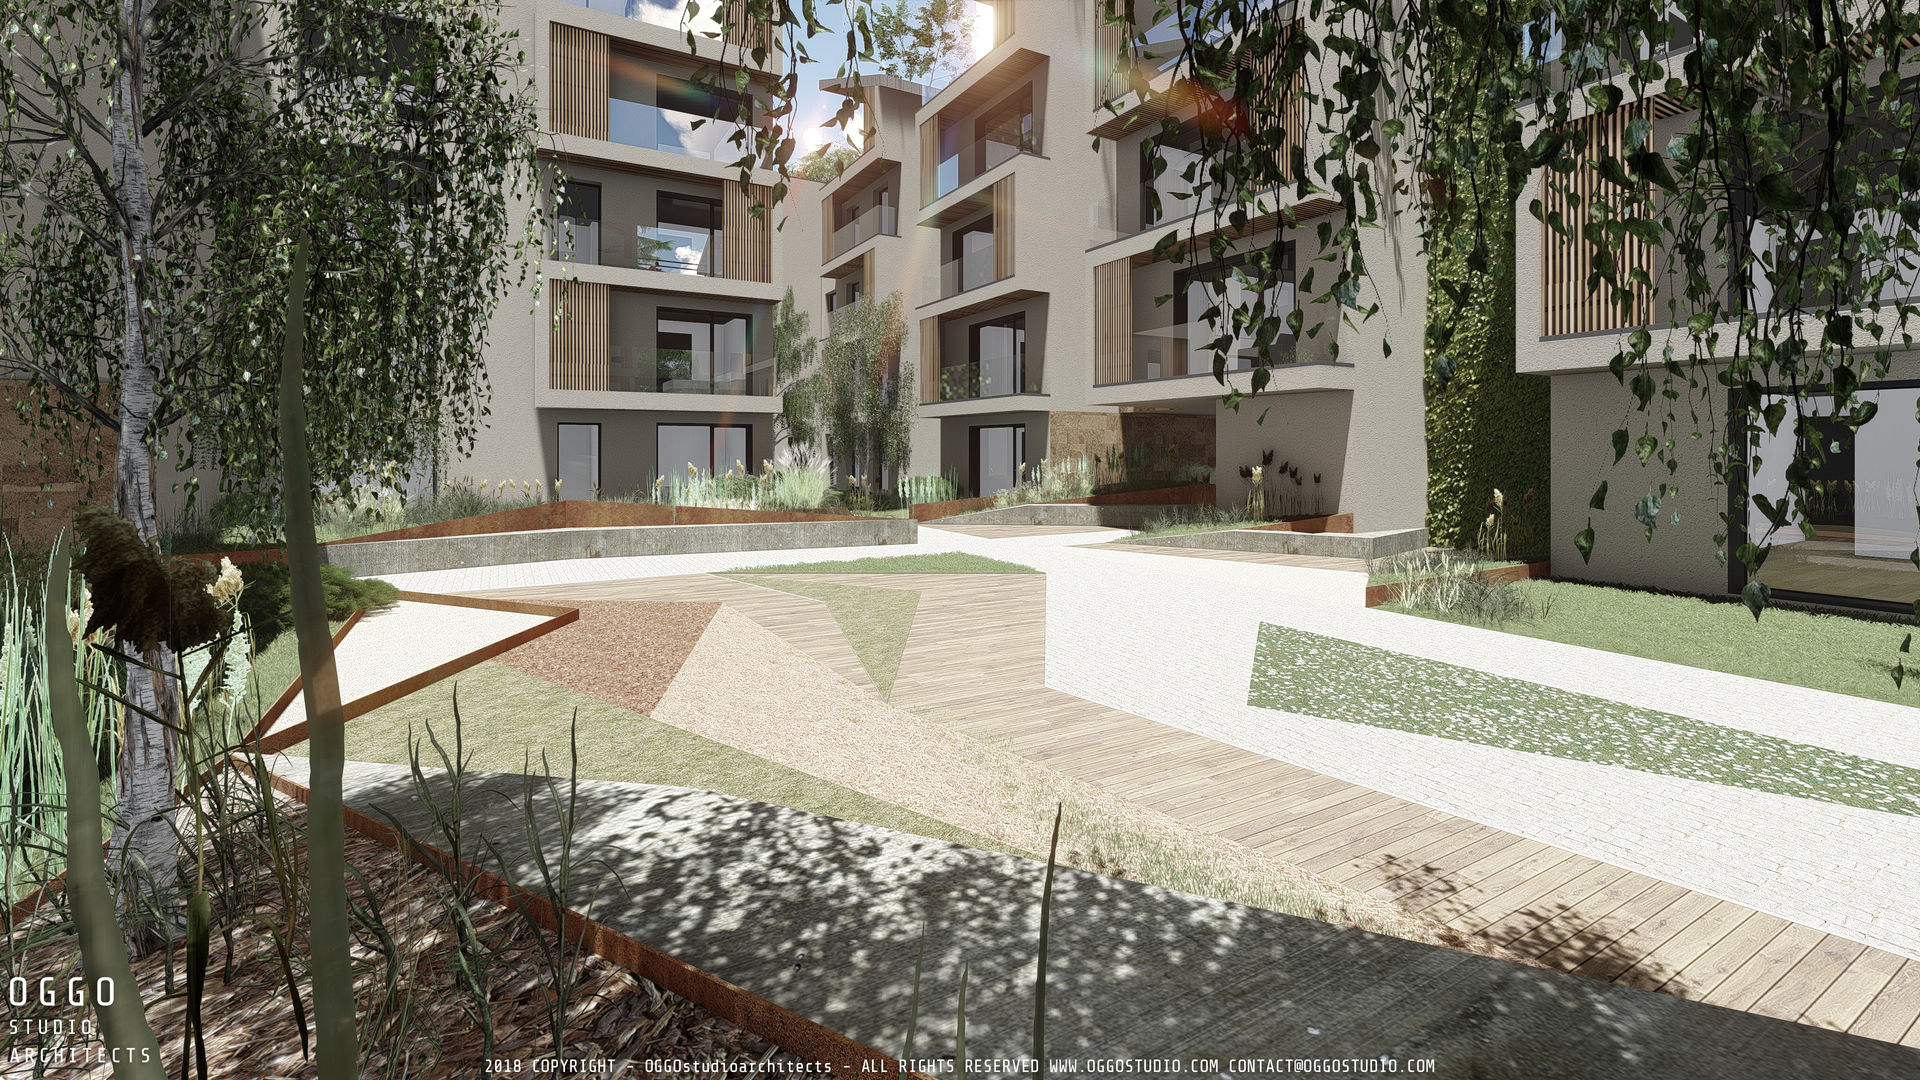 Housing project of 120 apartments OGGOstudioarchitects, unipessoal lda Jardines de estilo moderno Romainville,Collective housing,square,green,wood